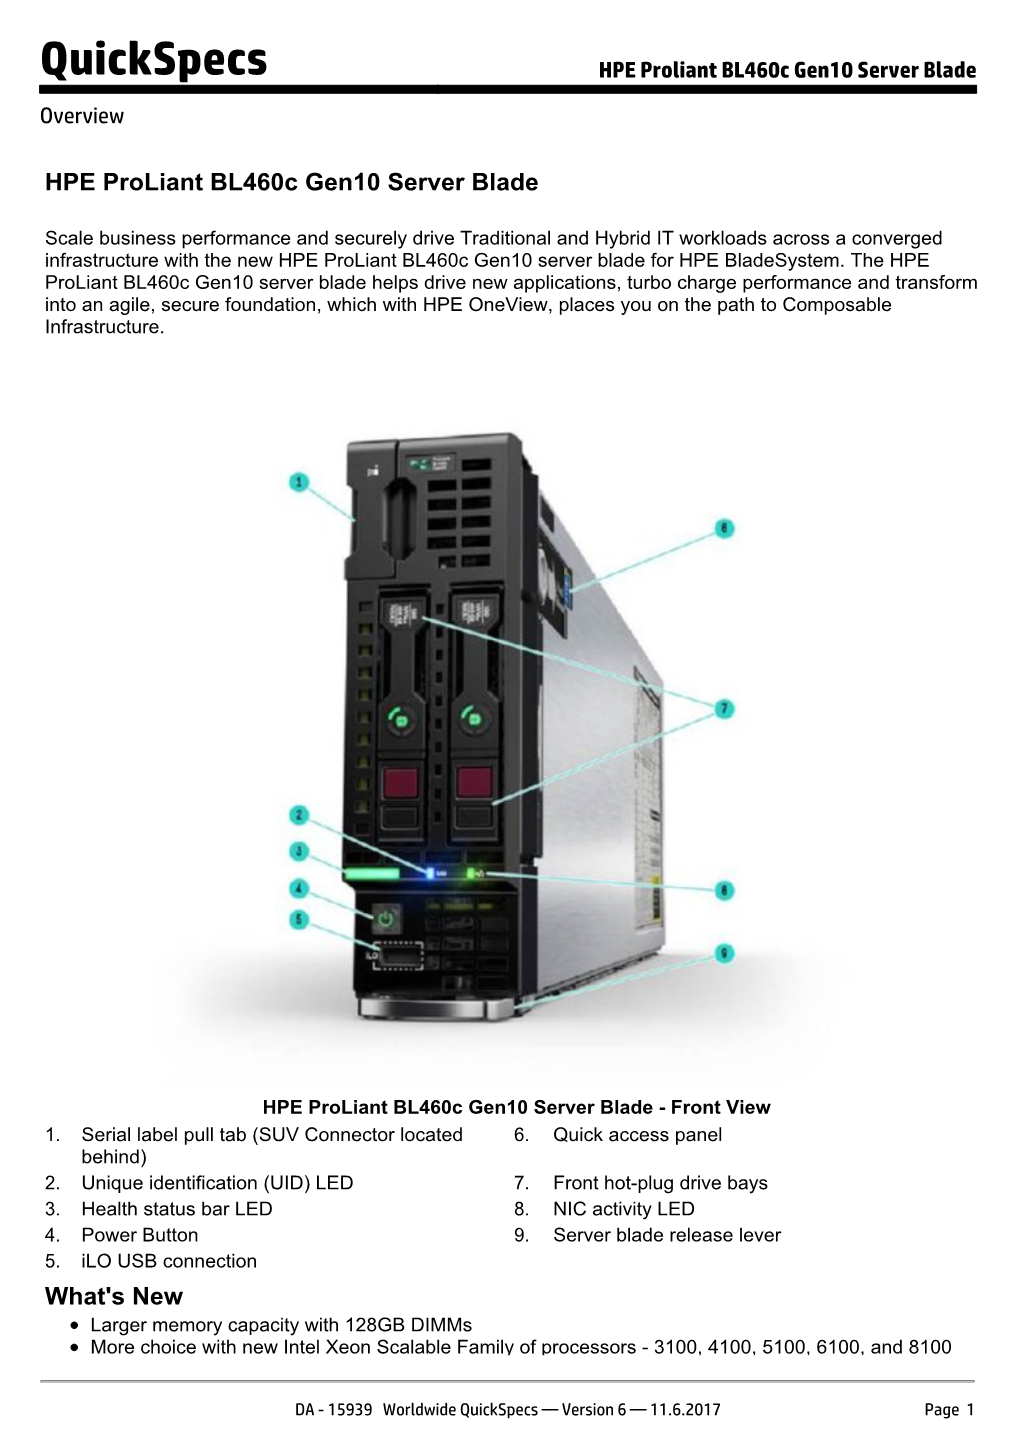 HPE Proliant Bl460c Gen10 Server Blade Overview